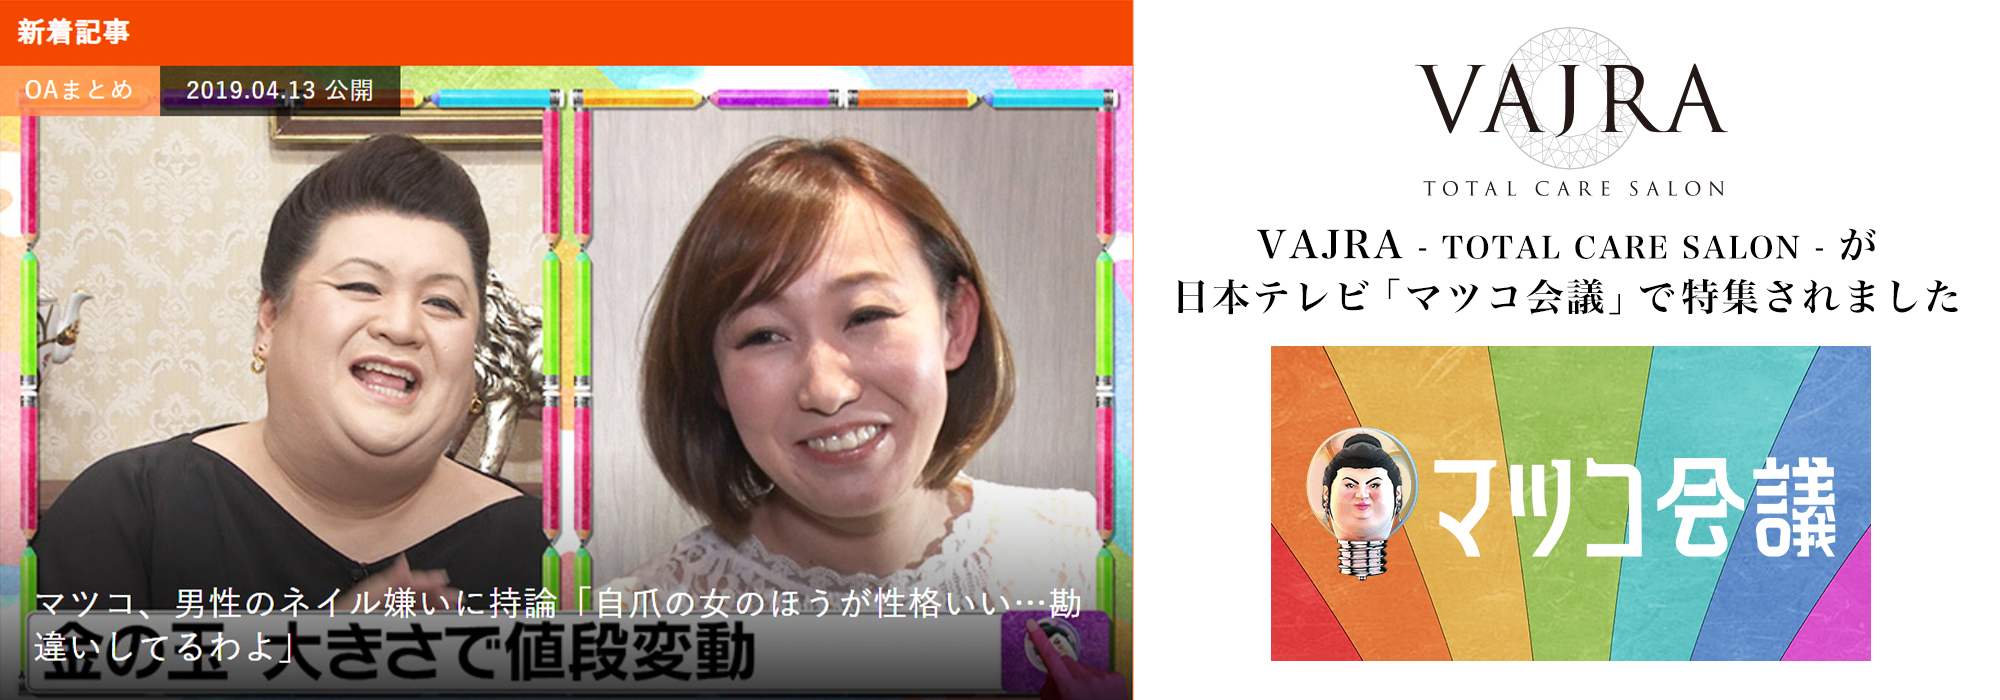 VAJRAが日本テレビ「マツコ会議」で特集されました